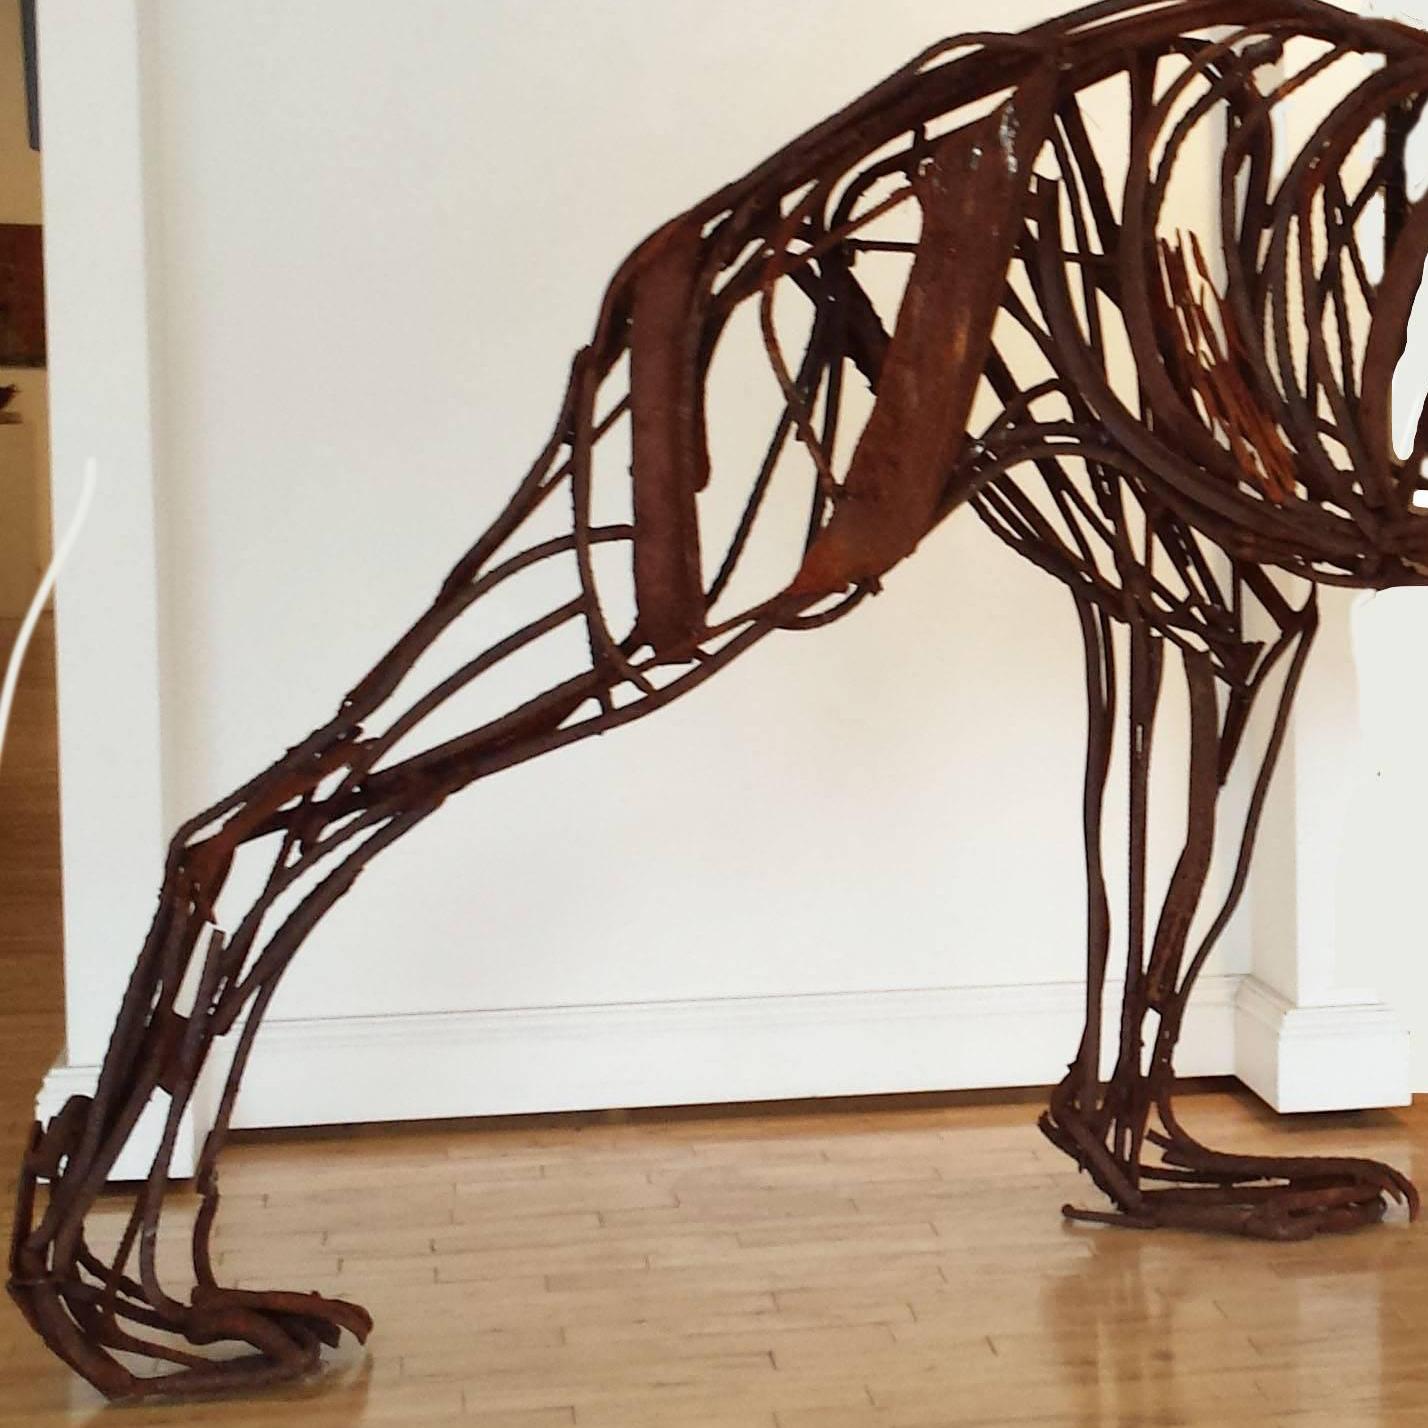 Grand Bear - Contemporary Sculpture by Wendy Klemperer